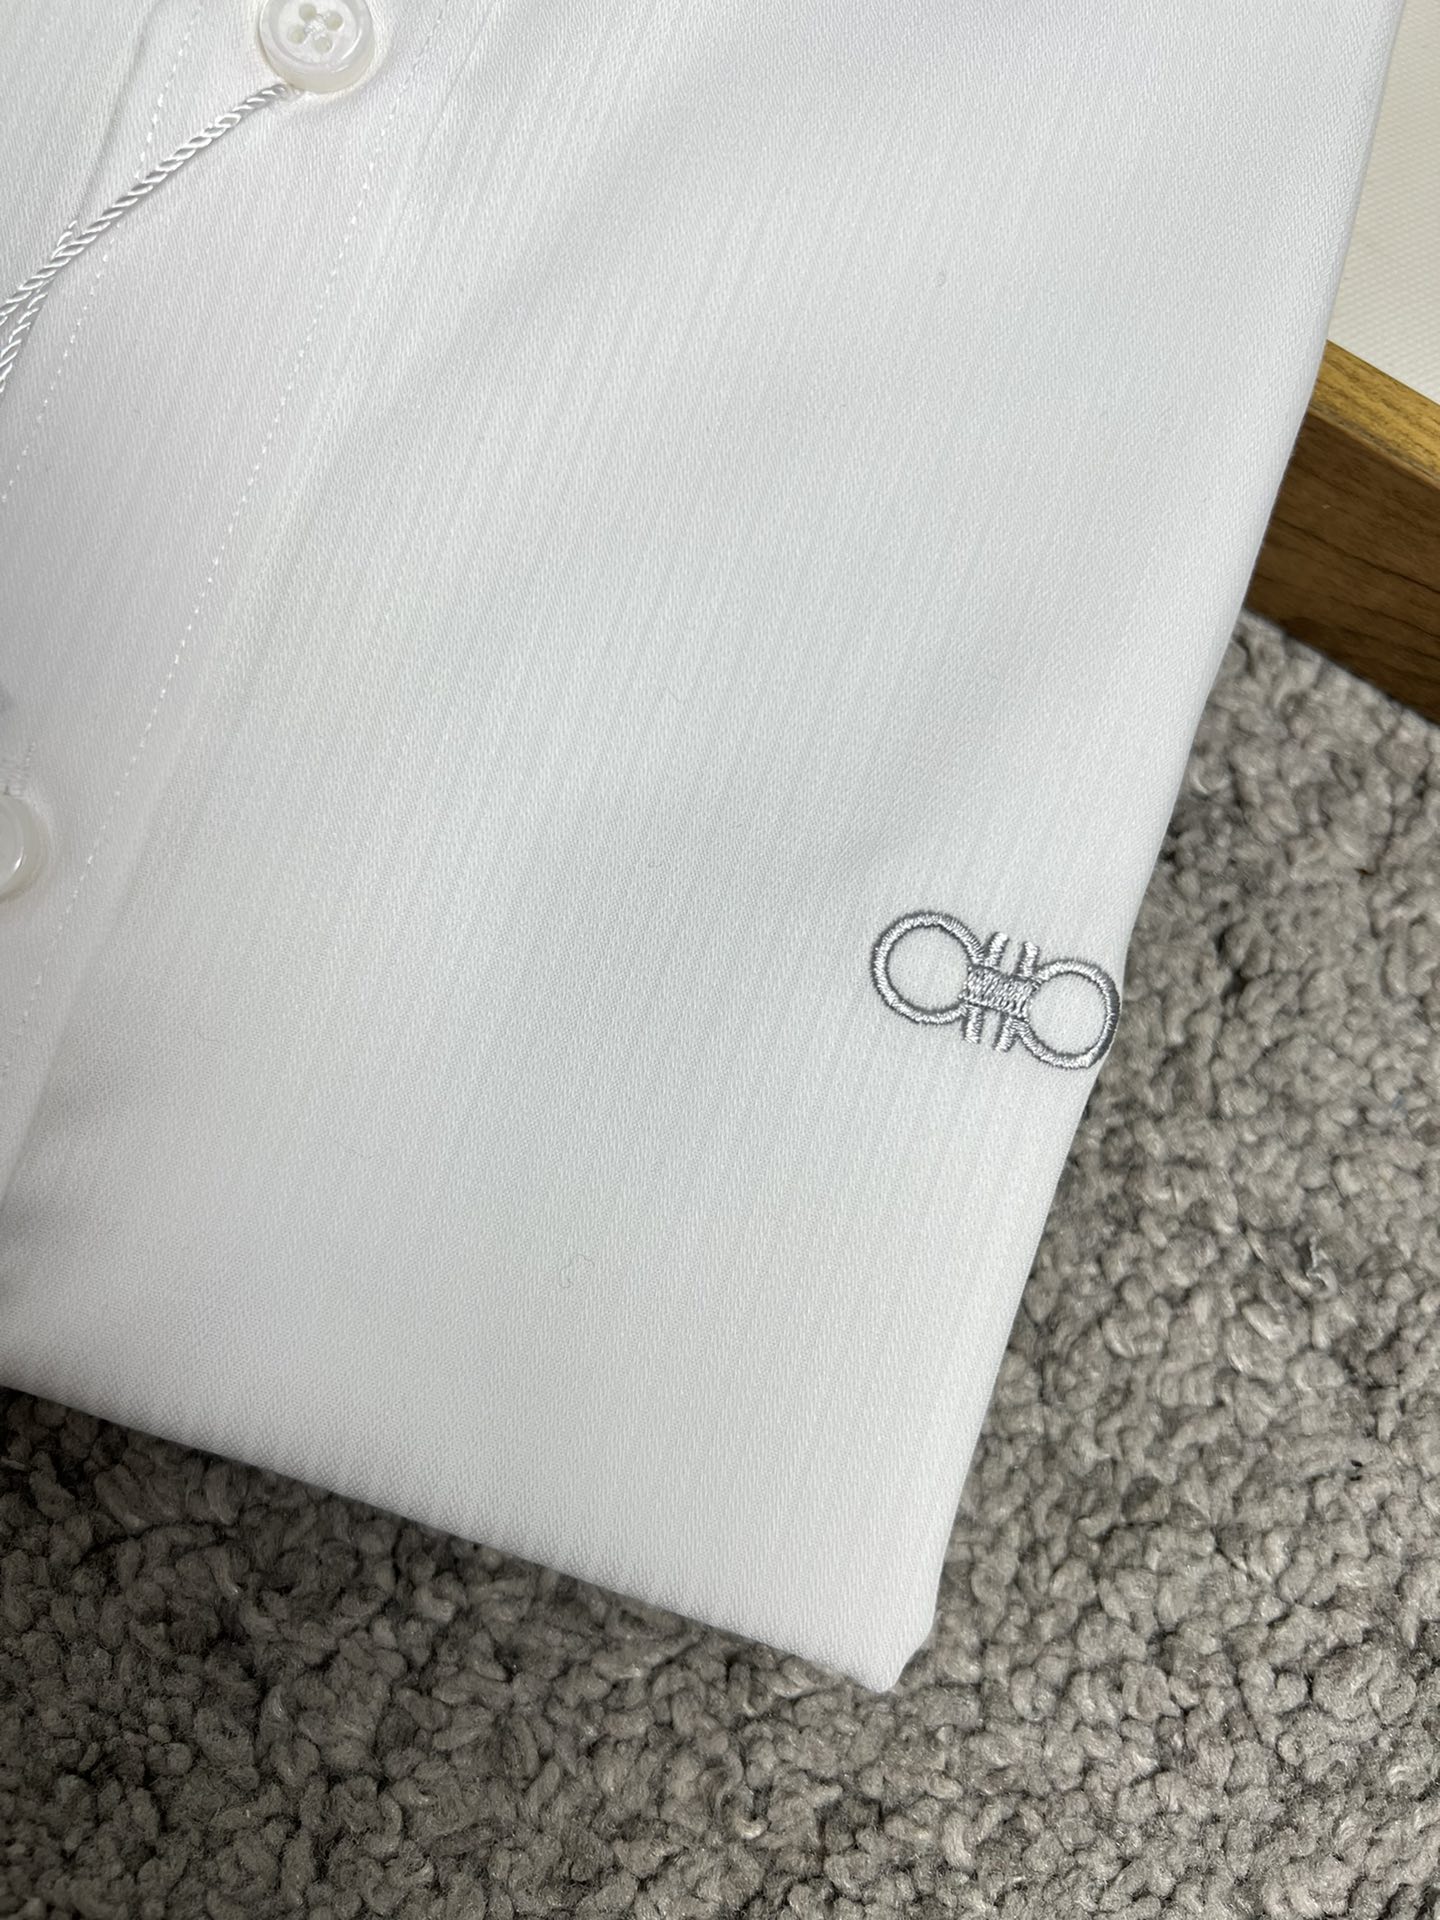 Fe菲拉格慕24SS春夏新款短袖衬衫商务休闲简约百搭高端系列黑色白色S,M,L,XL,XXL